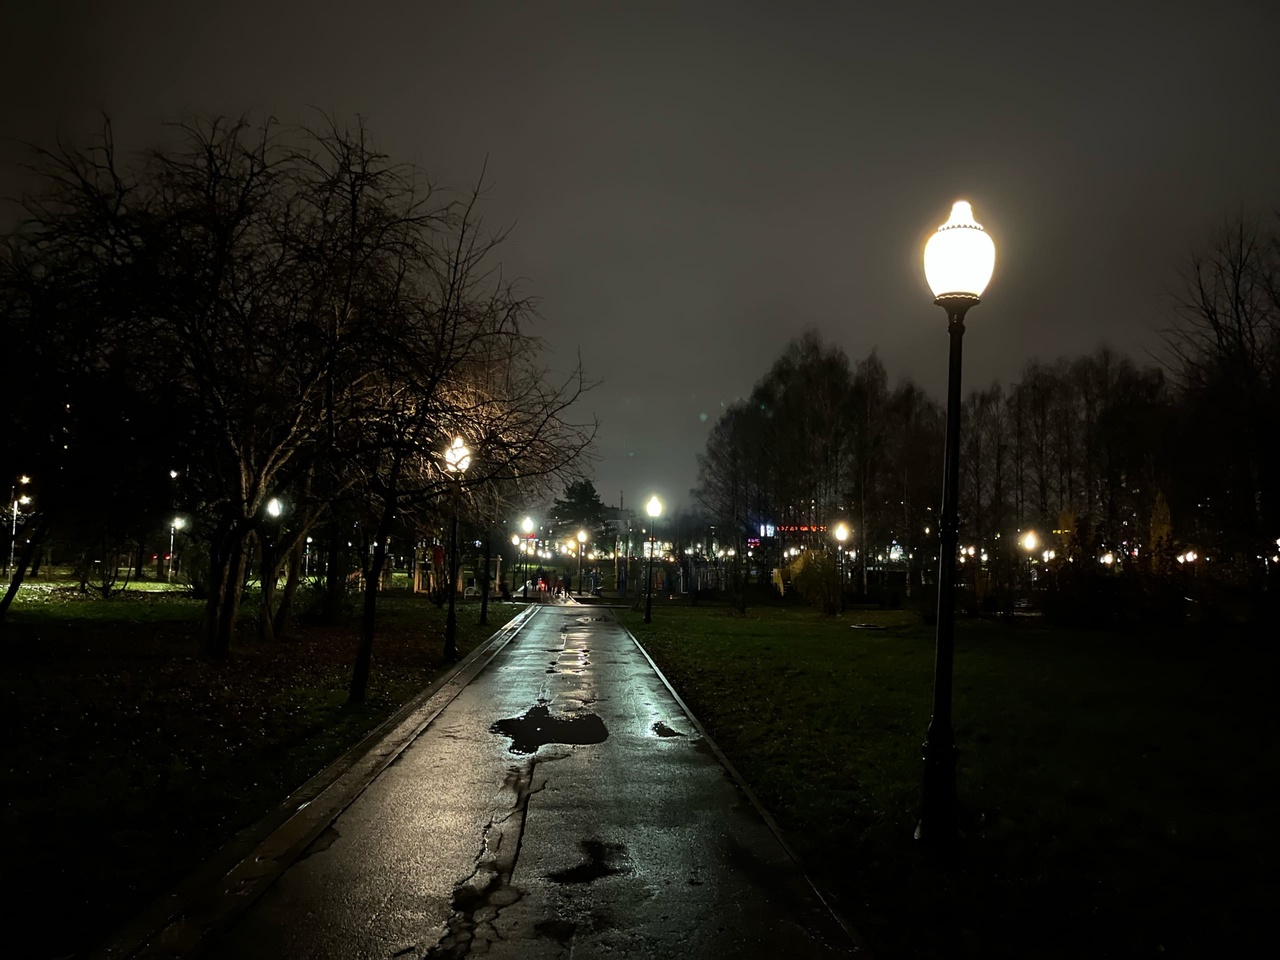 14 ноября в Кирове отключат свет